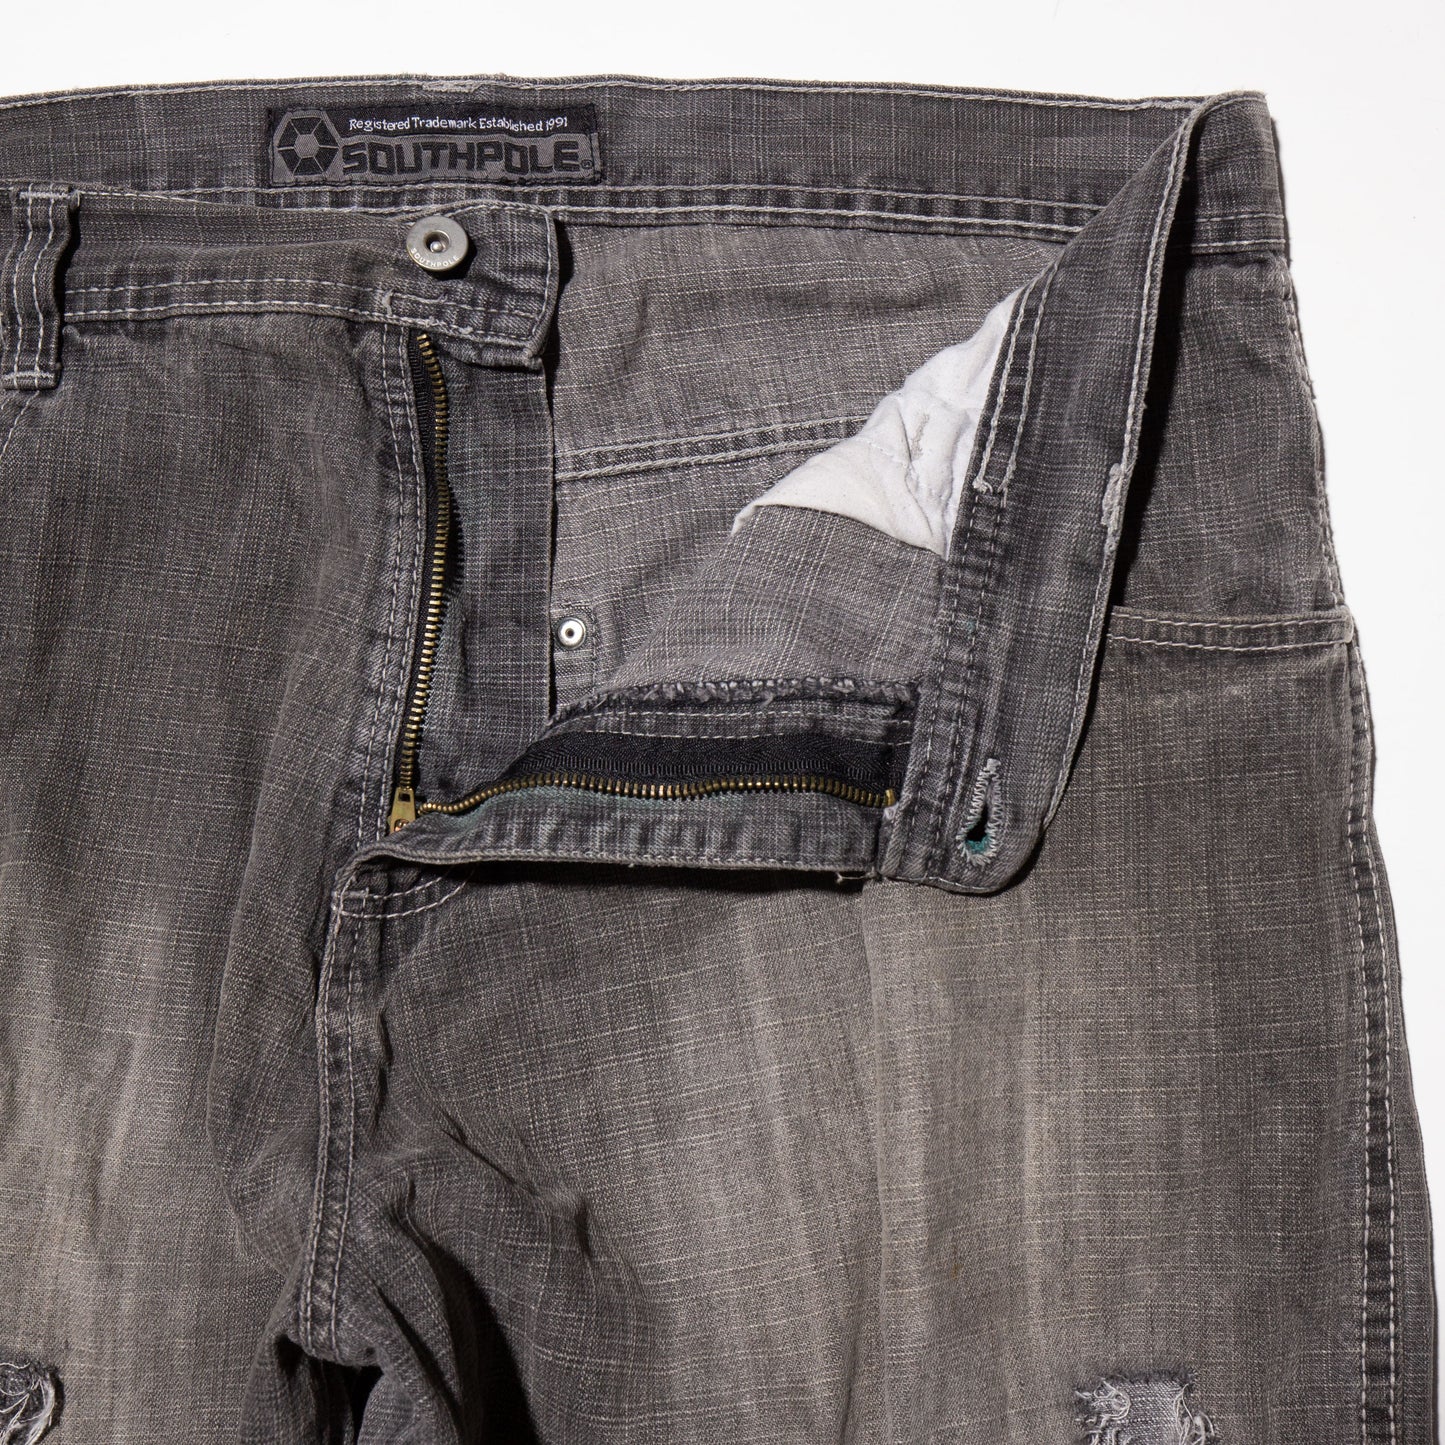 vintage southpole fade broken baggy jeans